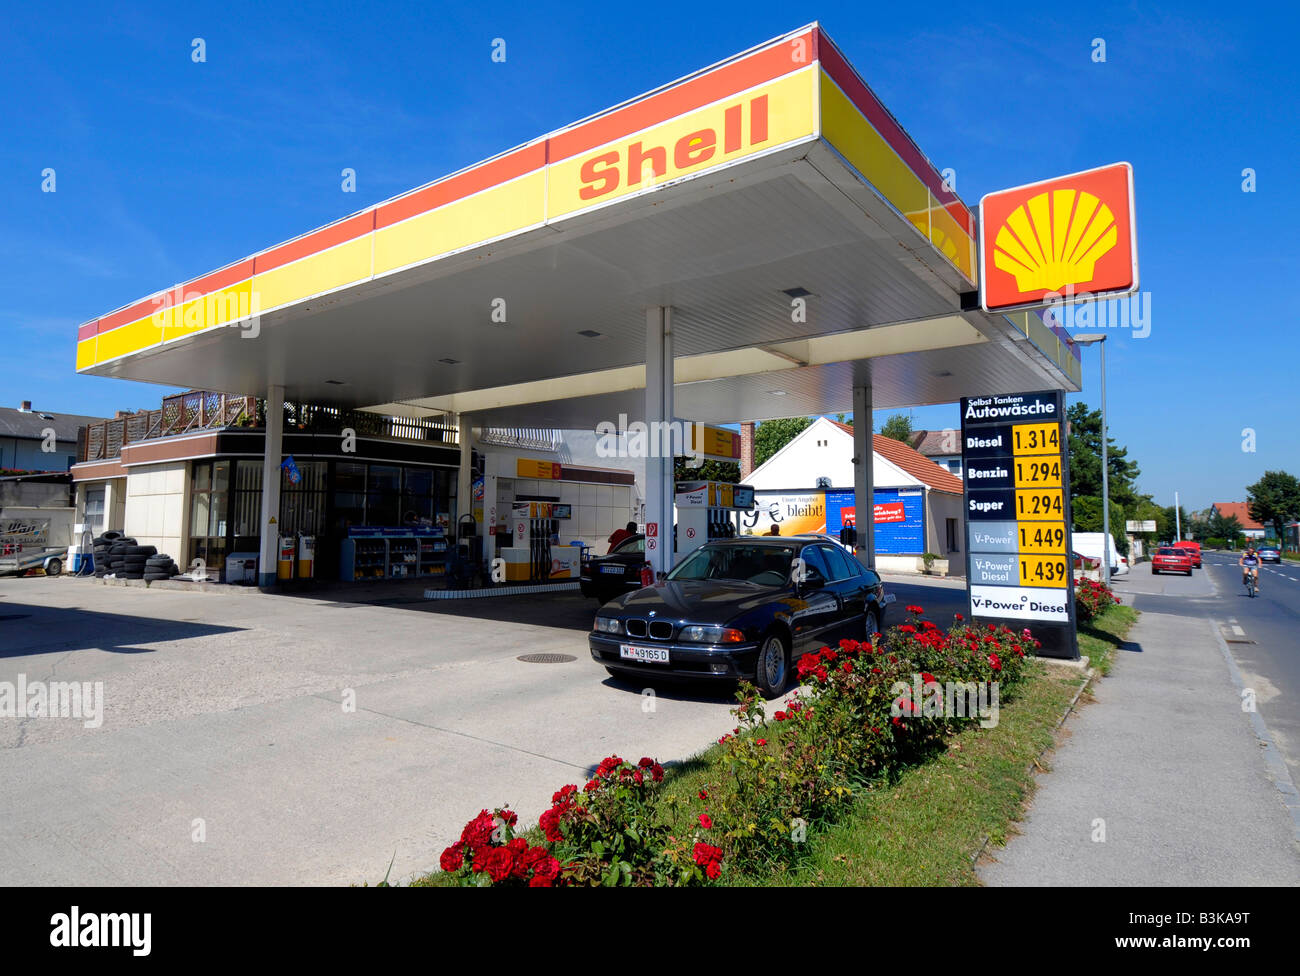 Shell Tankstelle, Österreich Stockfoto